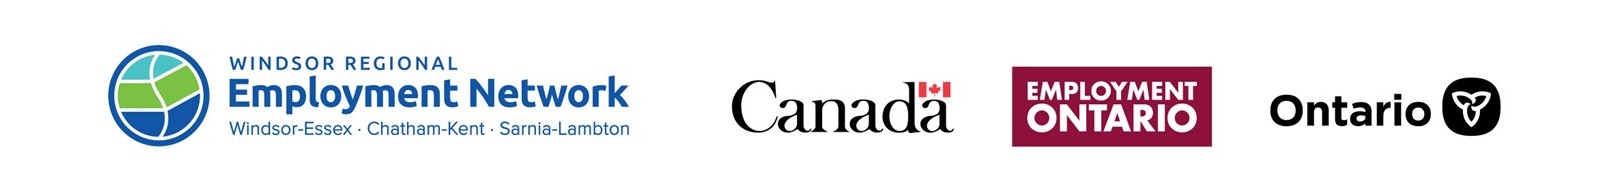 Logos: Windsor Regional Employment Network, Government of Canada, Employment Ontario, Government of Ontario